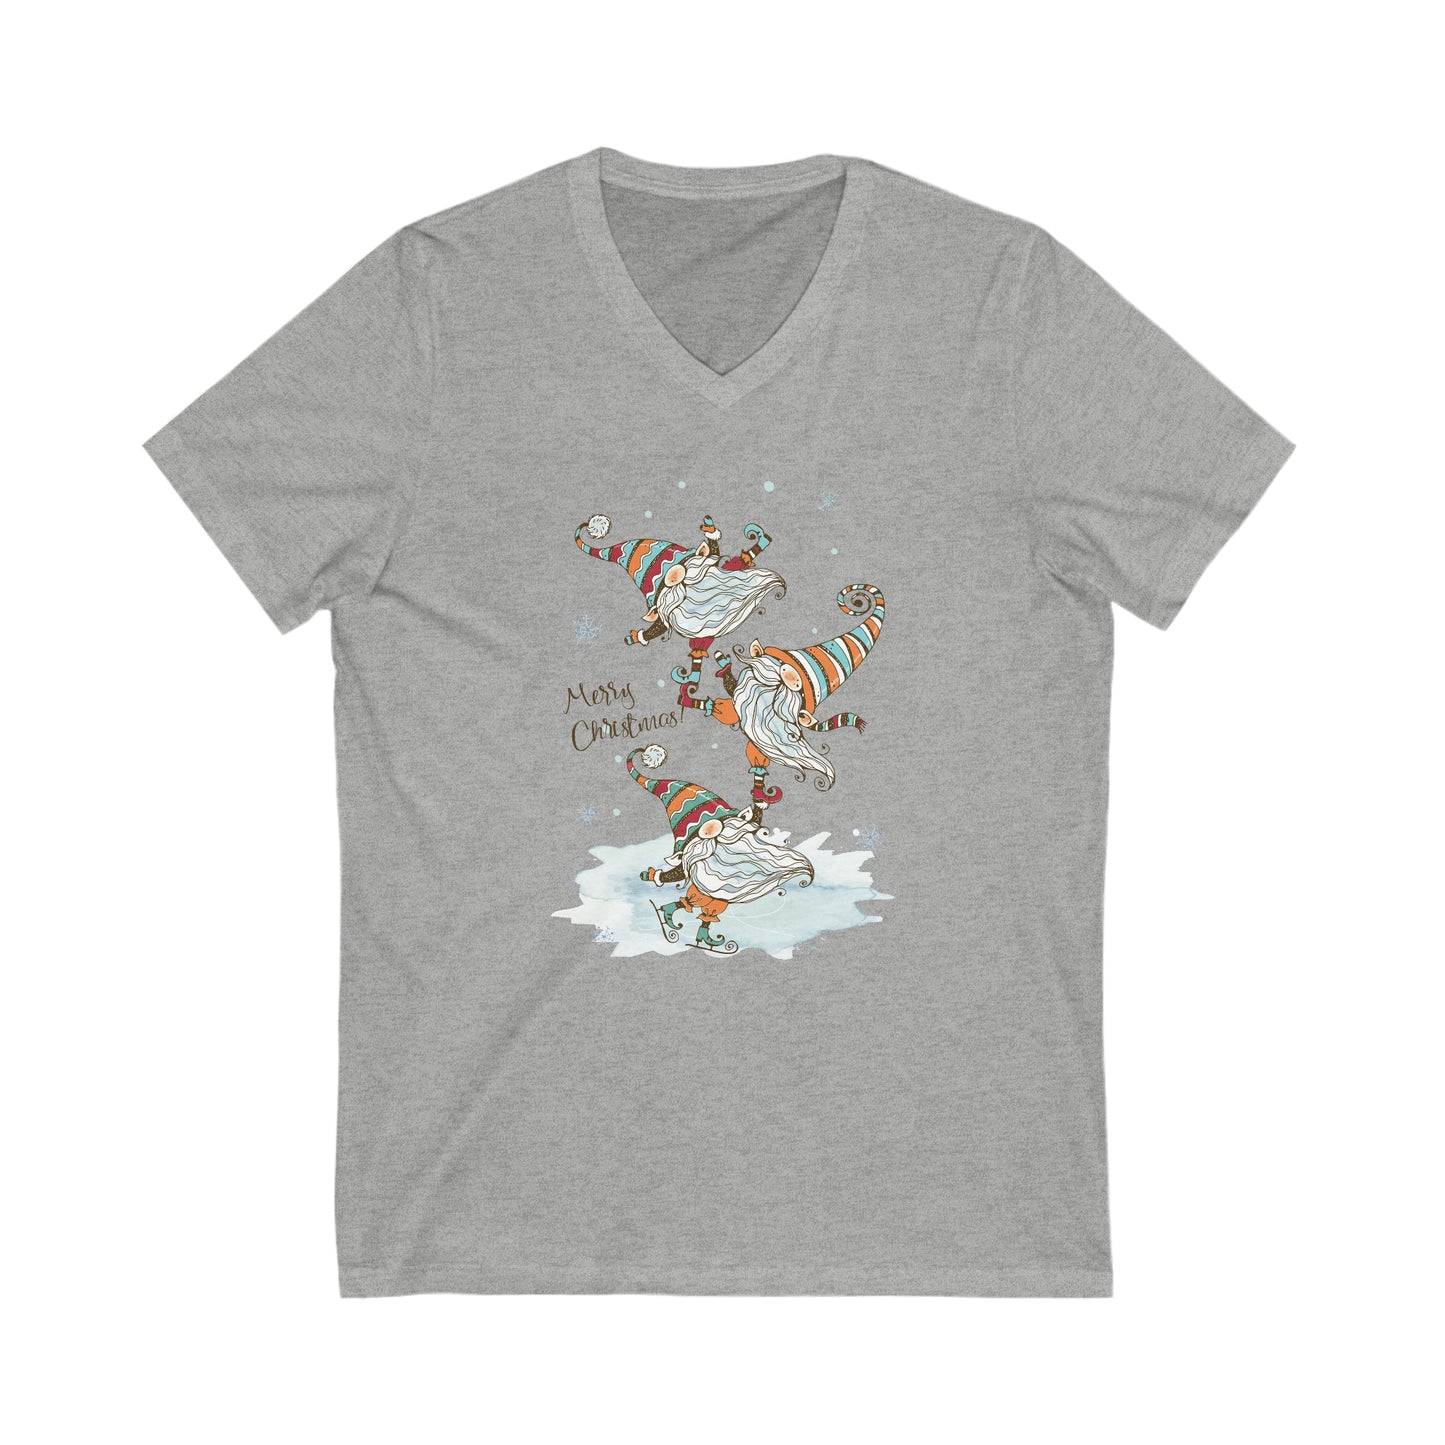 Christmas T-Shirt With Skating Gnomes For Fun Holiday T Shirt For Festive Ladies Skating TShirt